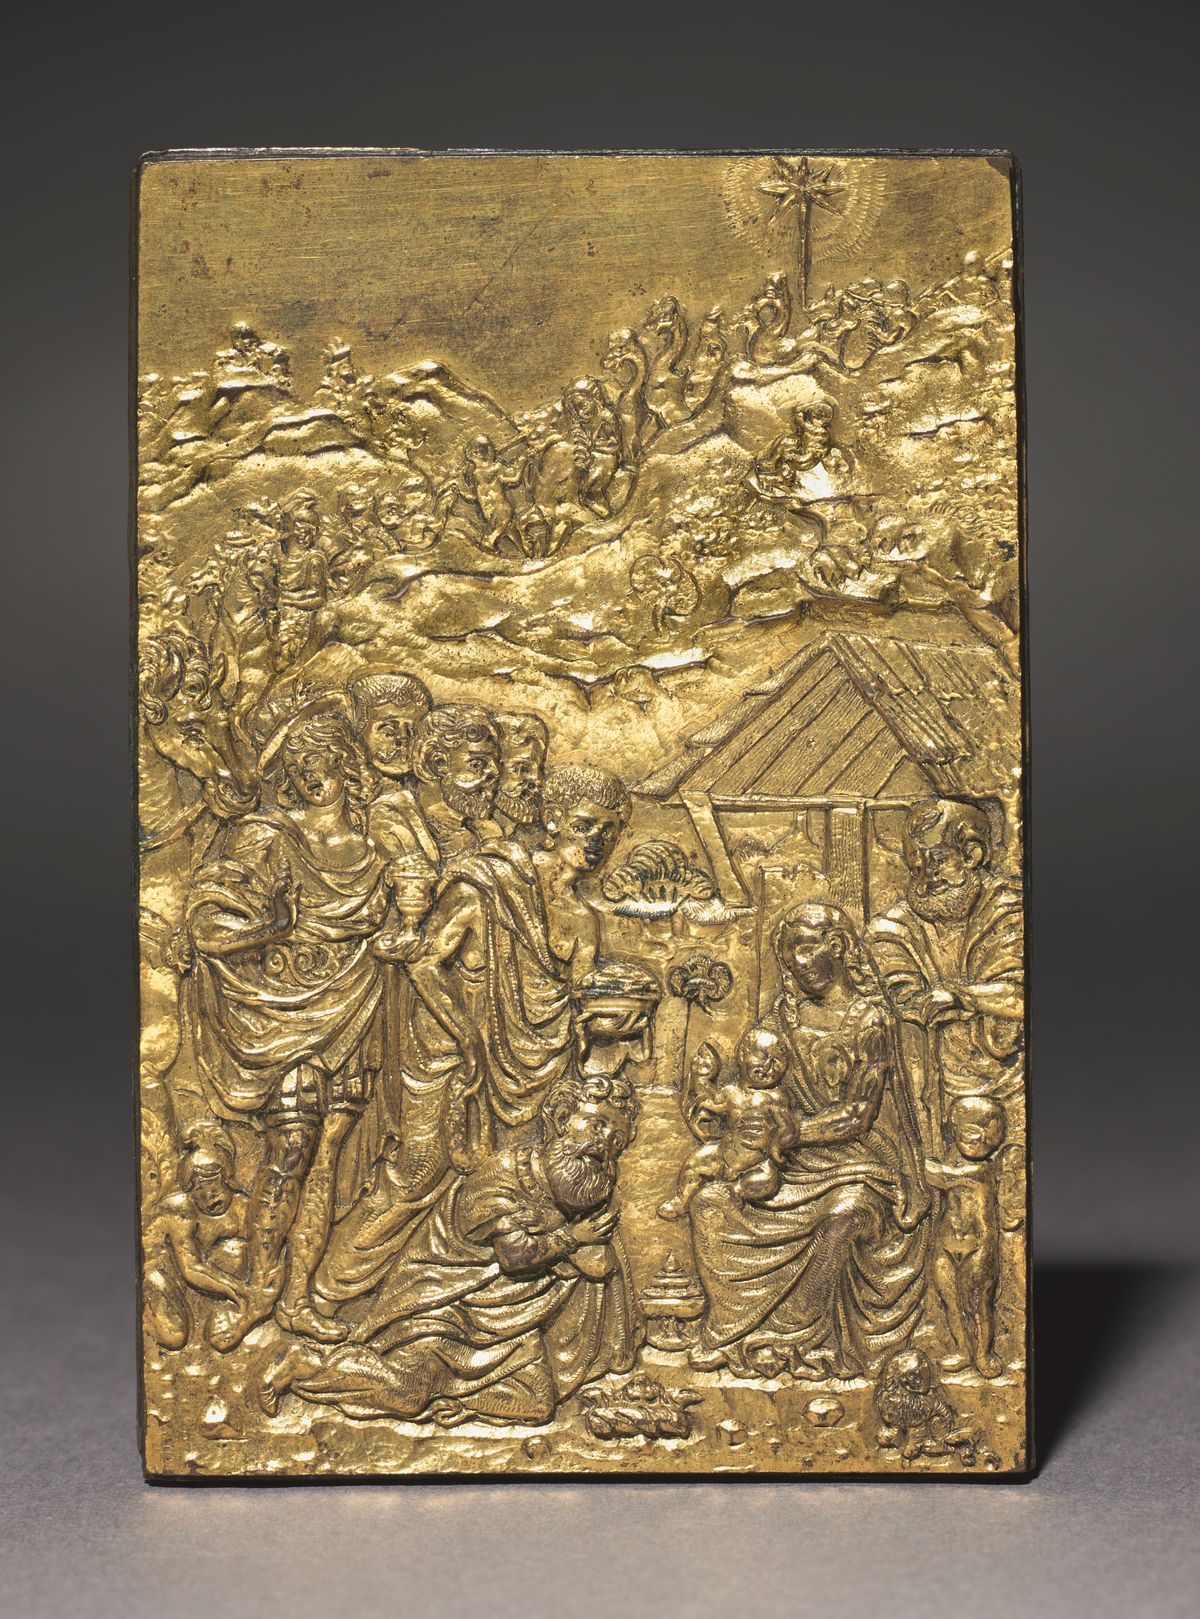 Pax with the Adoration of the Magi
(1500, Italy) - Catholic Stock Photo